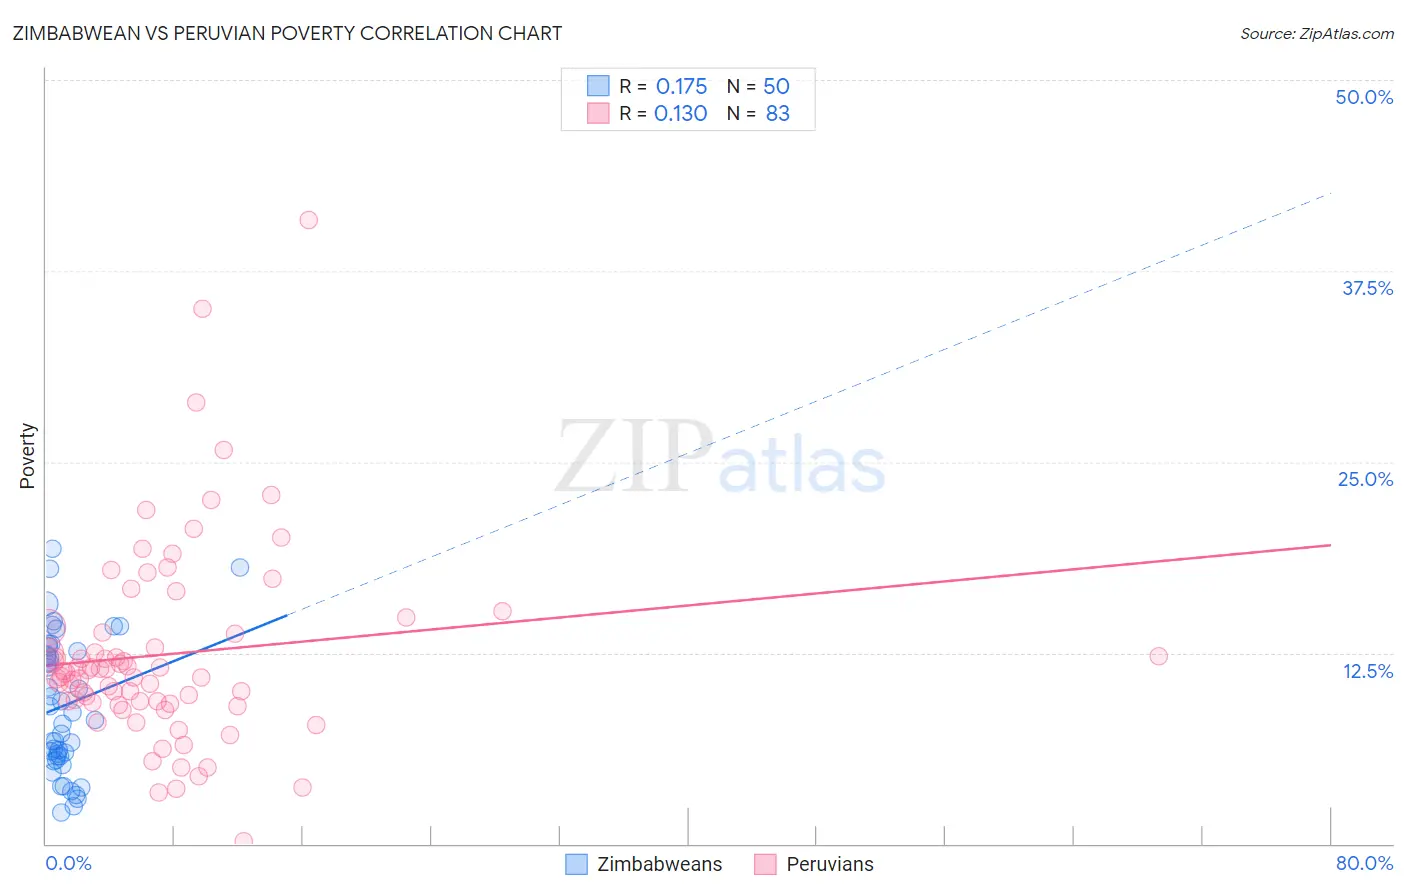 Zimbabwean vs Peruvian Poverty